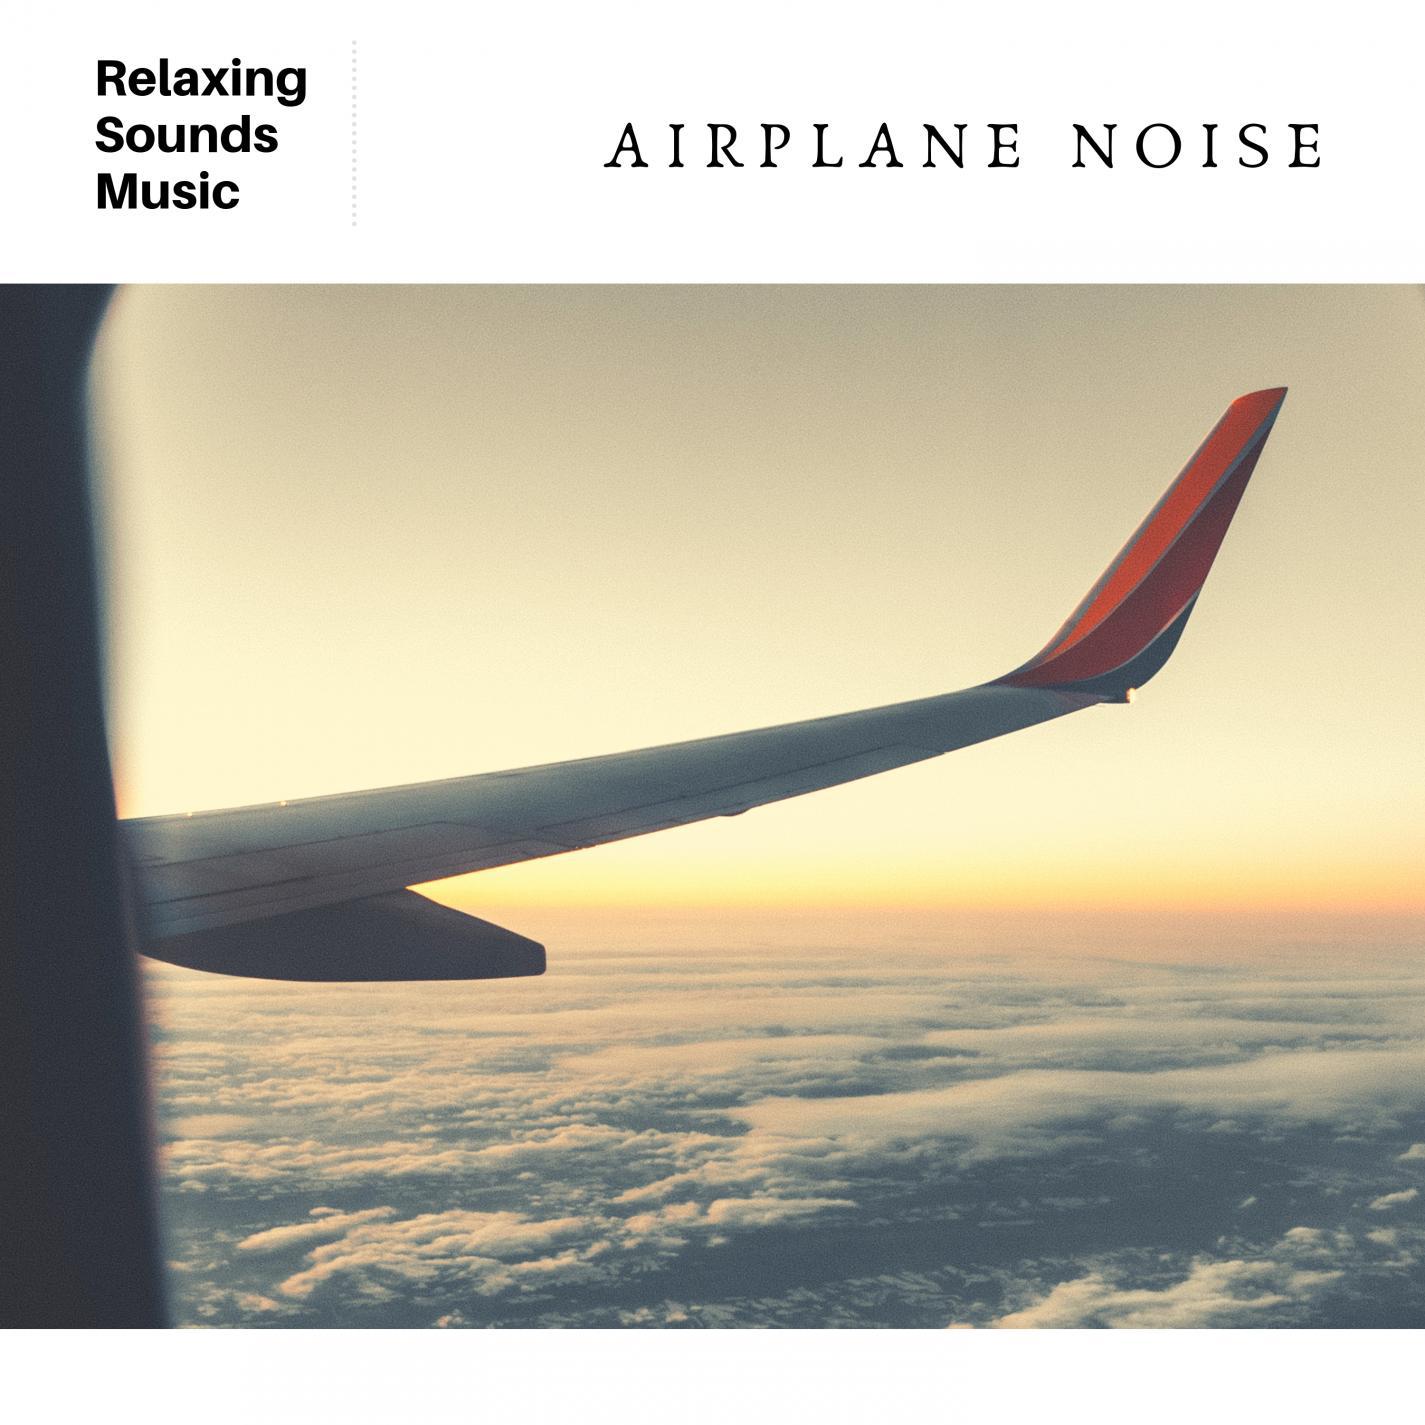 Private Jet Sound White Noise